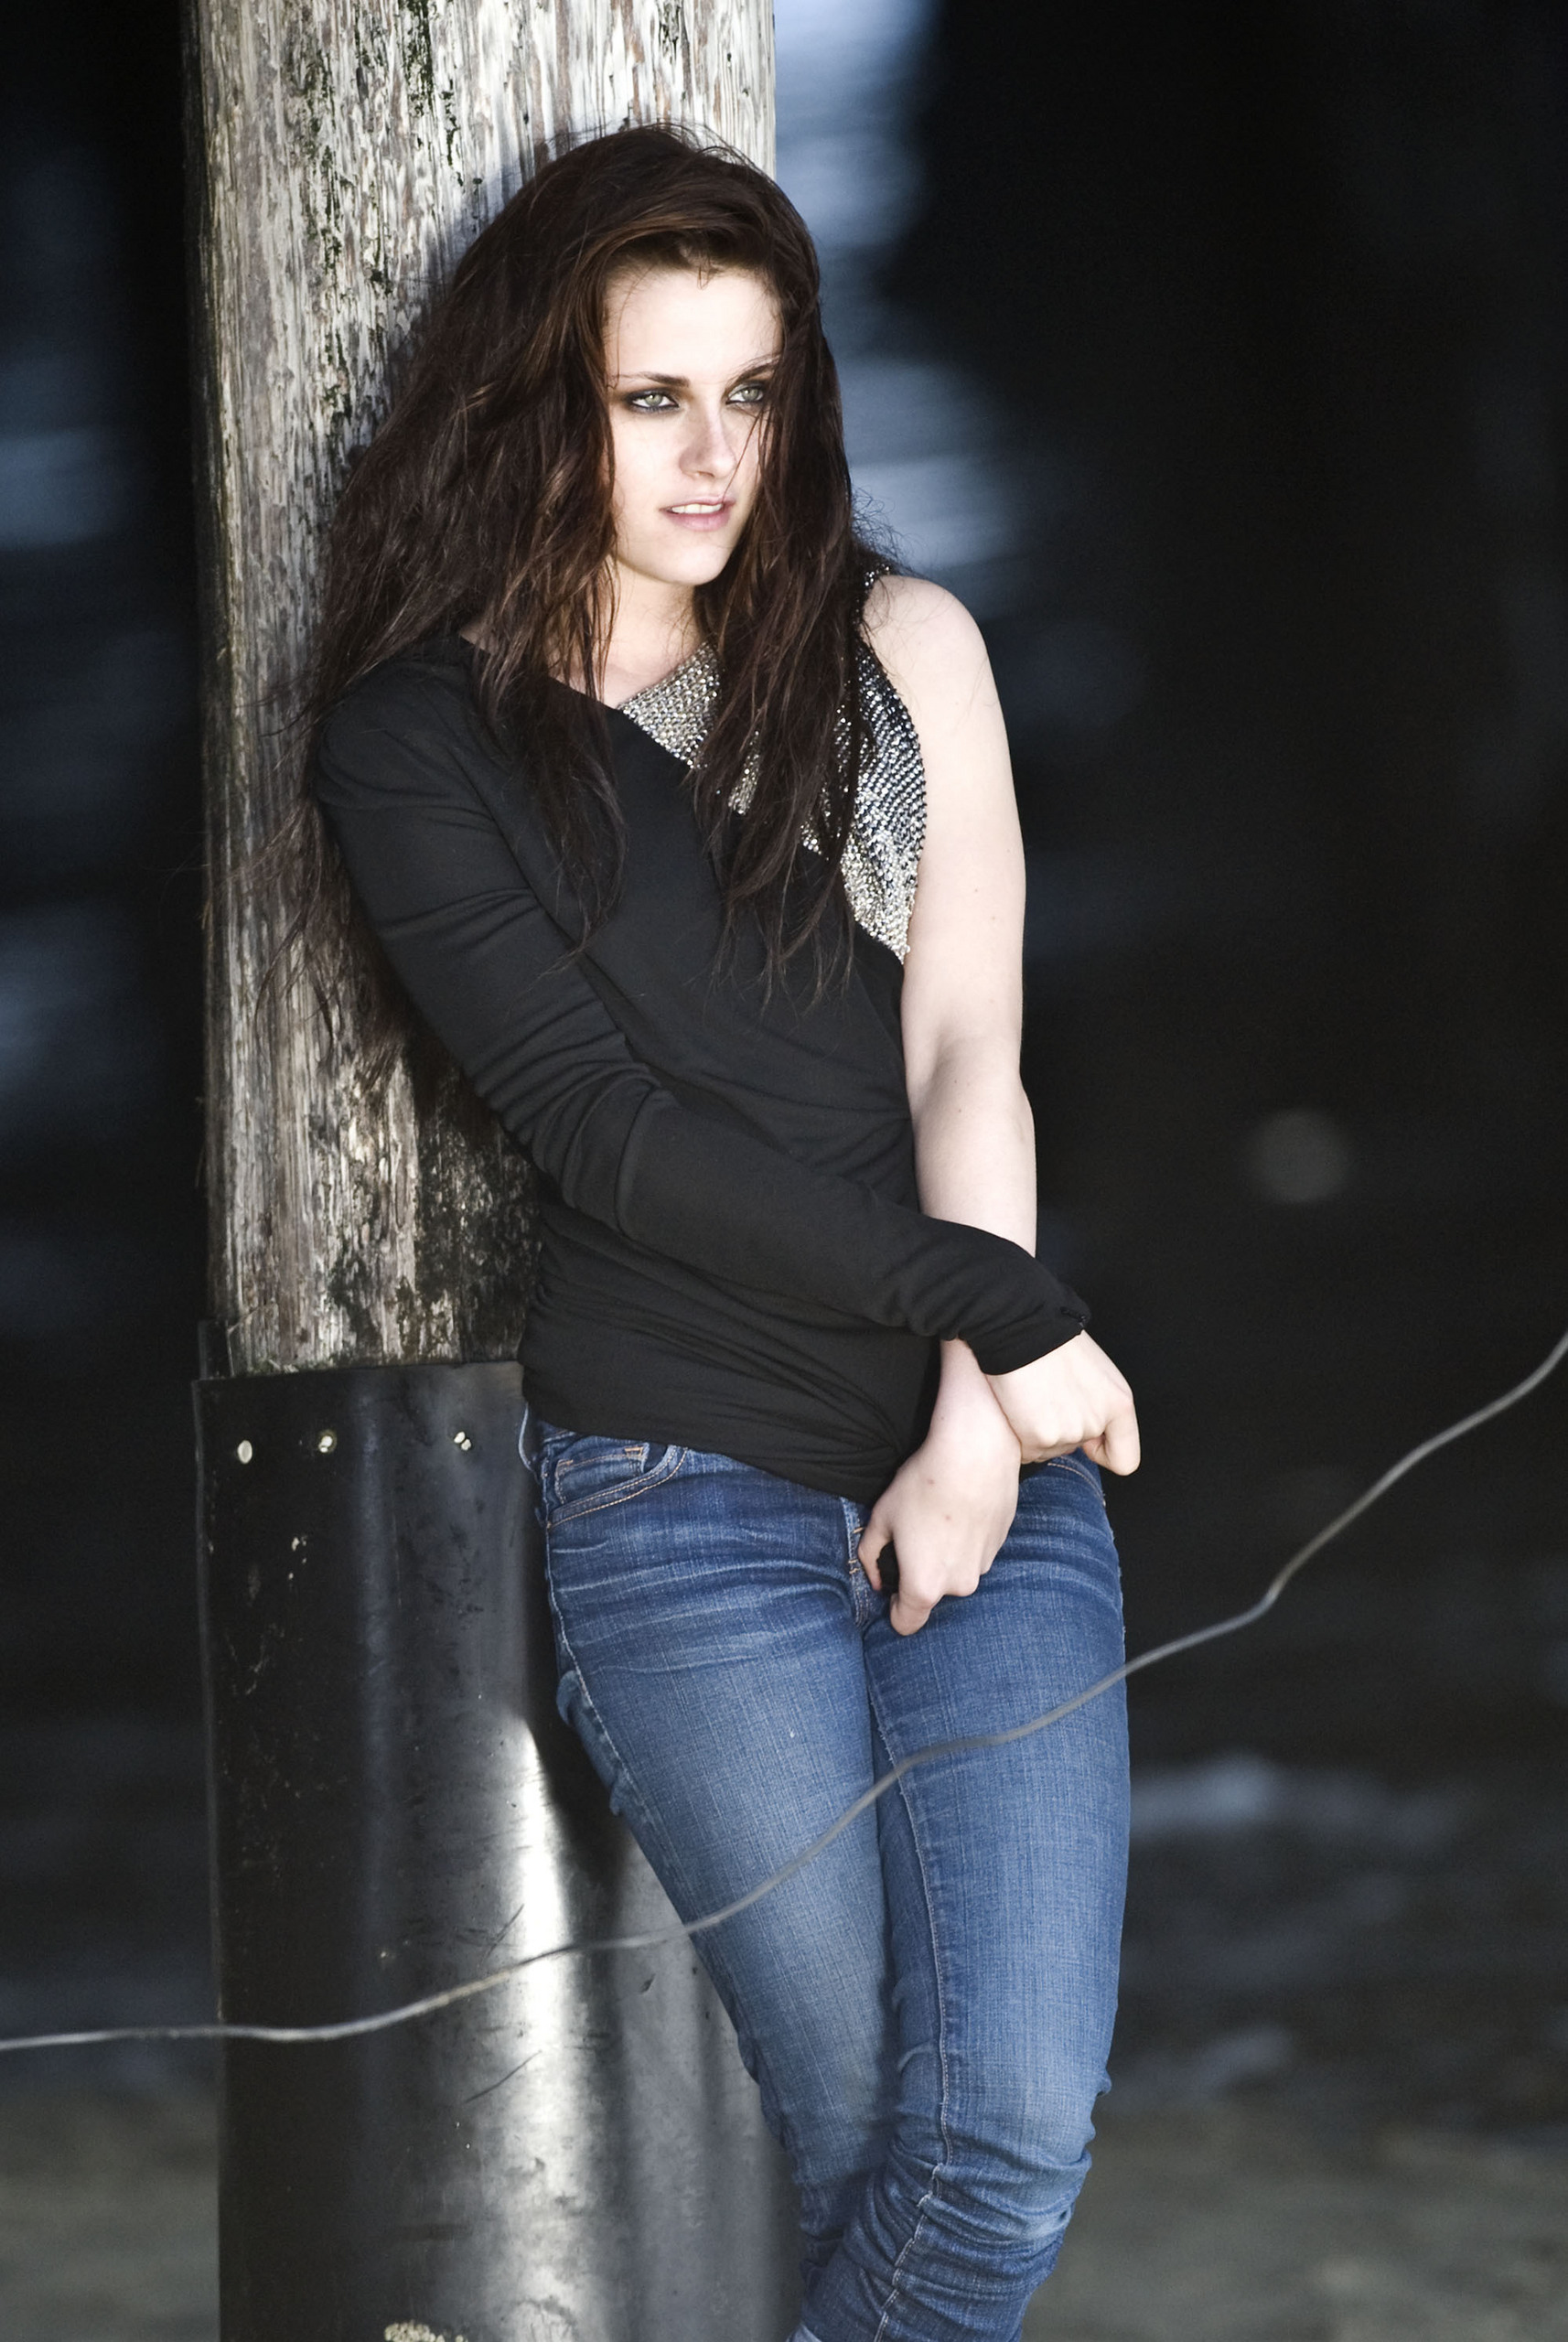 Kristen Stewart - Kristen Stewart Cute Hd - 1714x2560 Wallpaper 